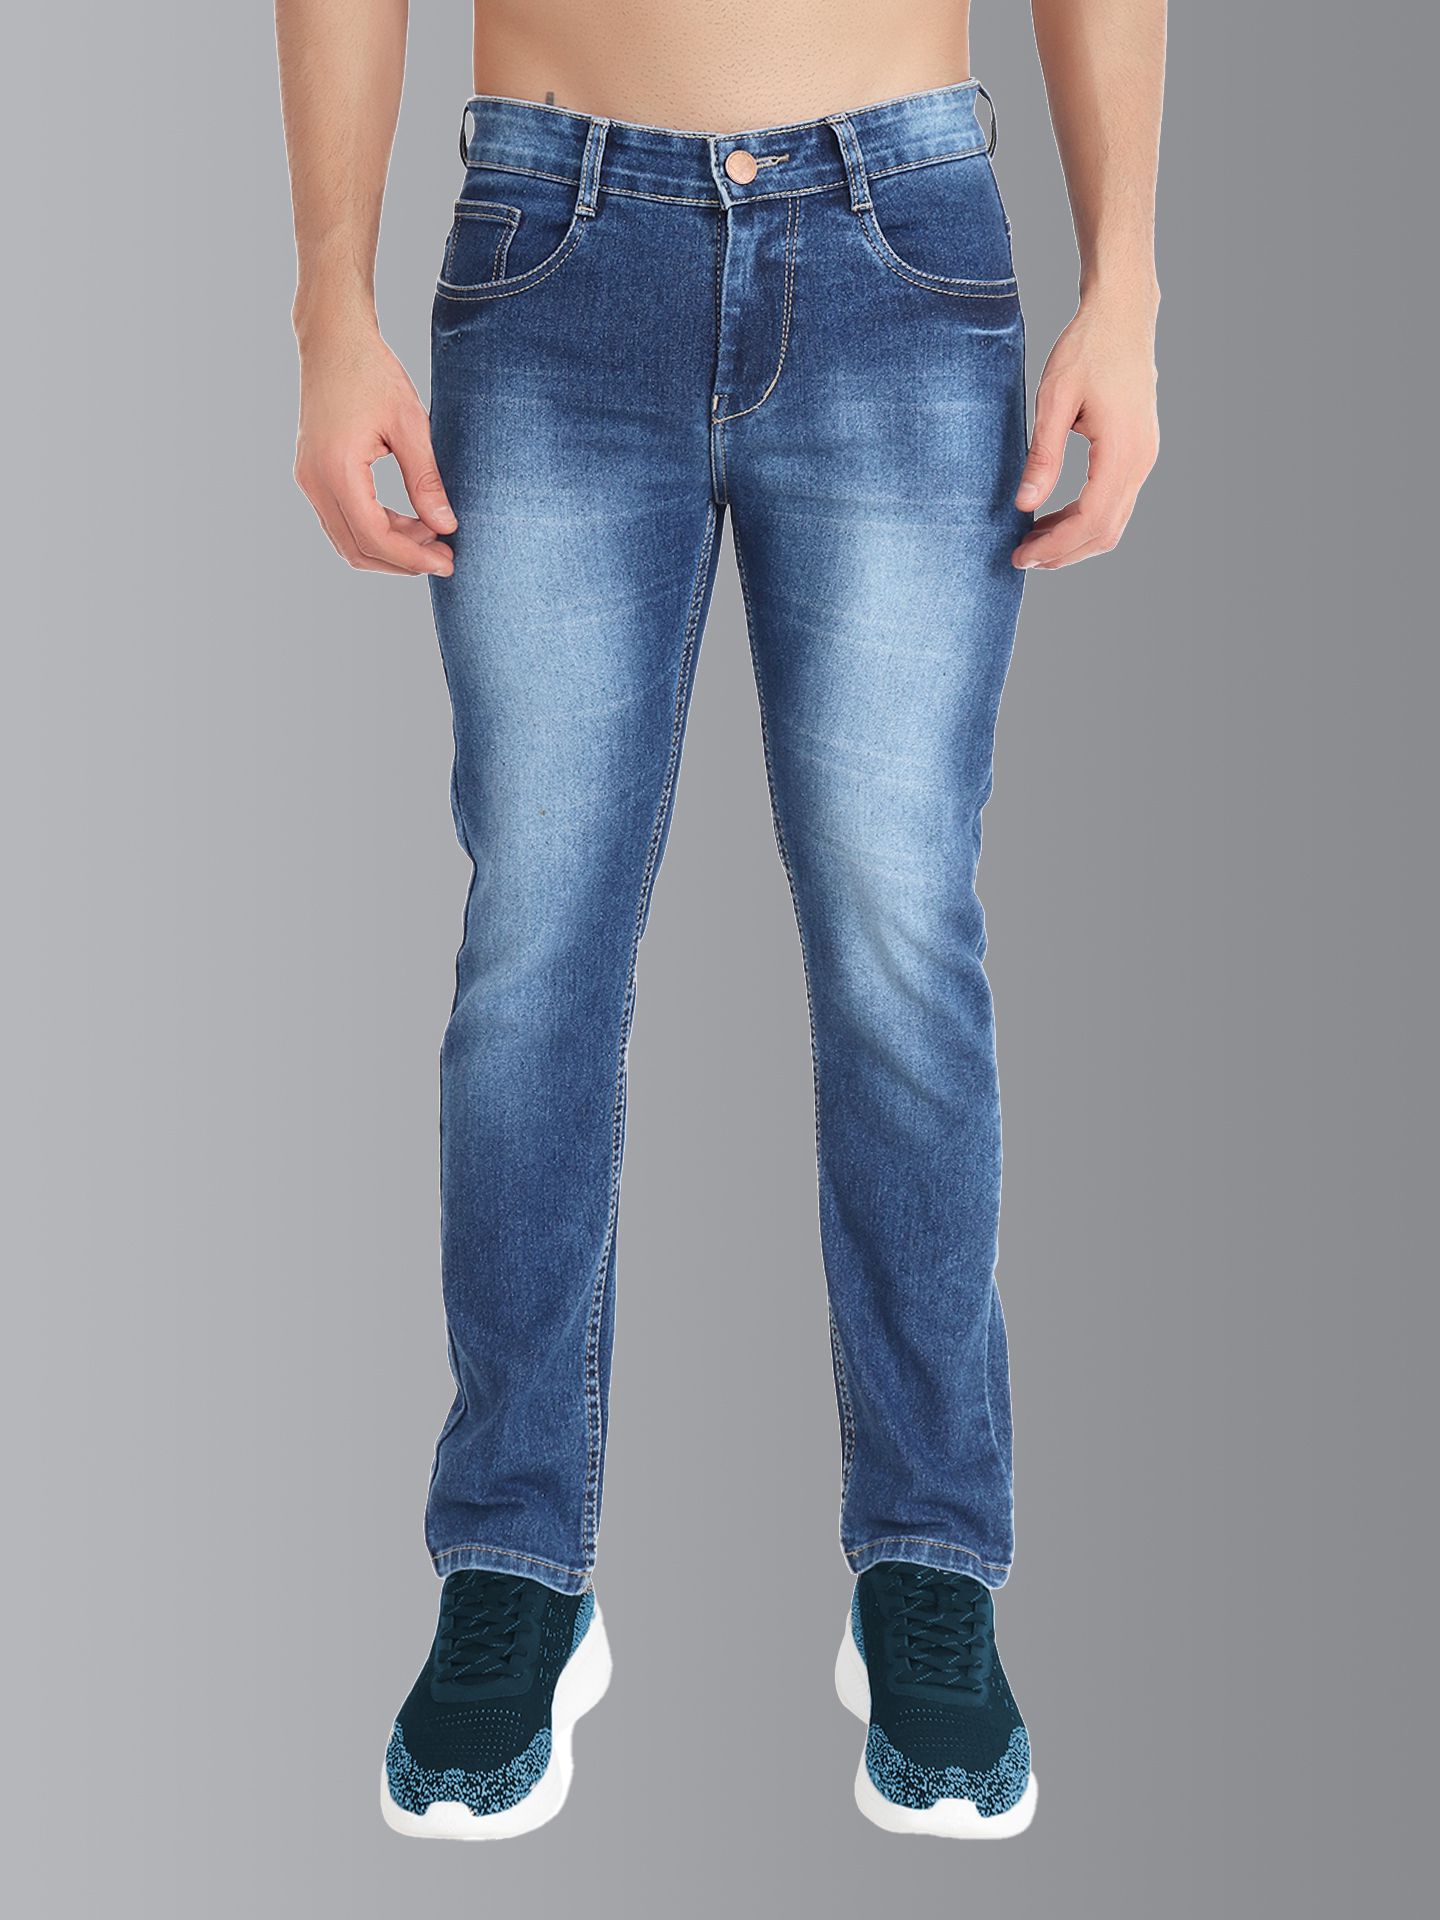     			RAGZO - Blue Denim Slim Fit Men's Jeans ( Pack of 1 )